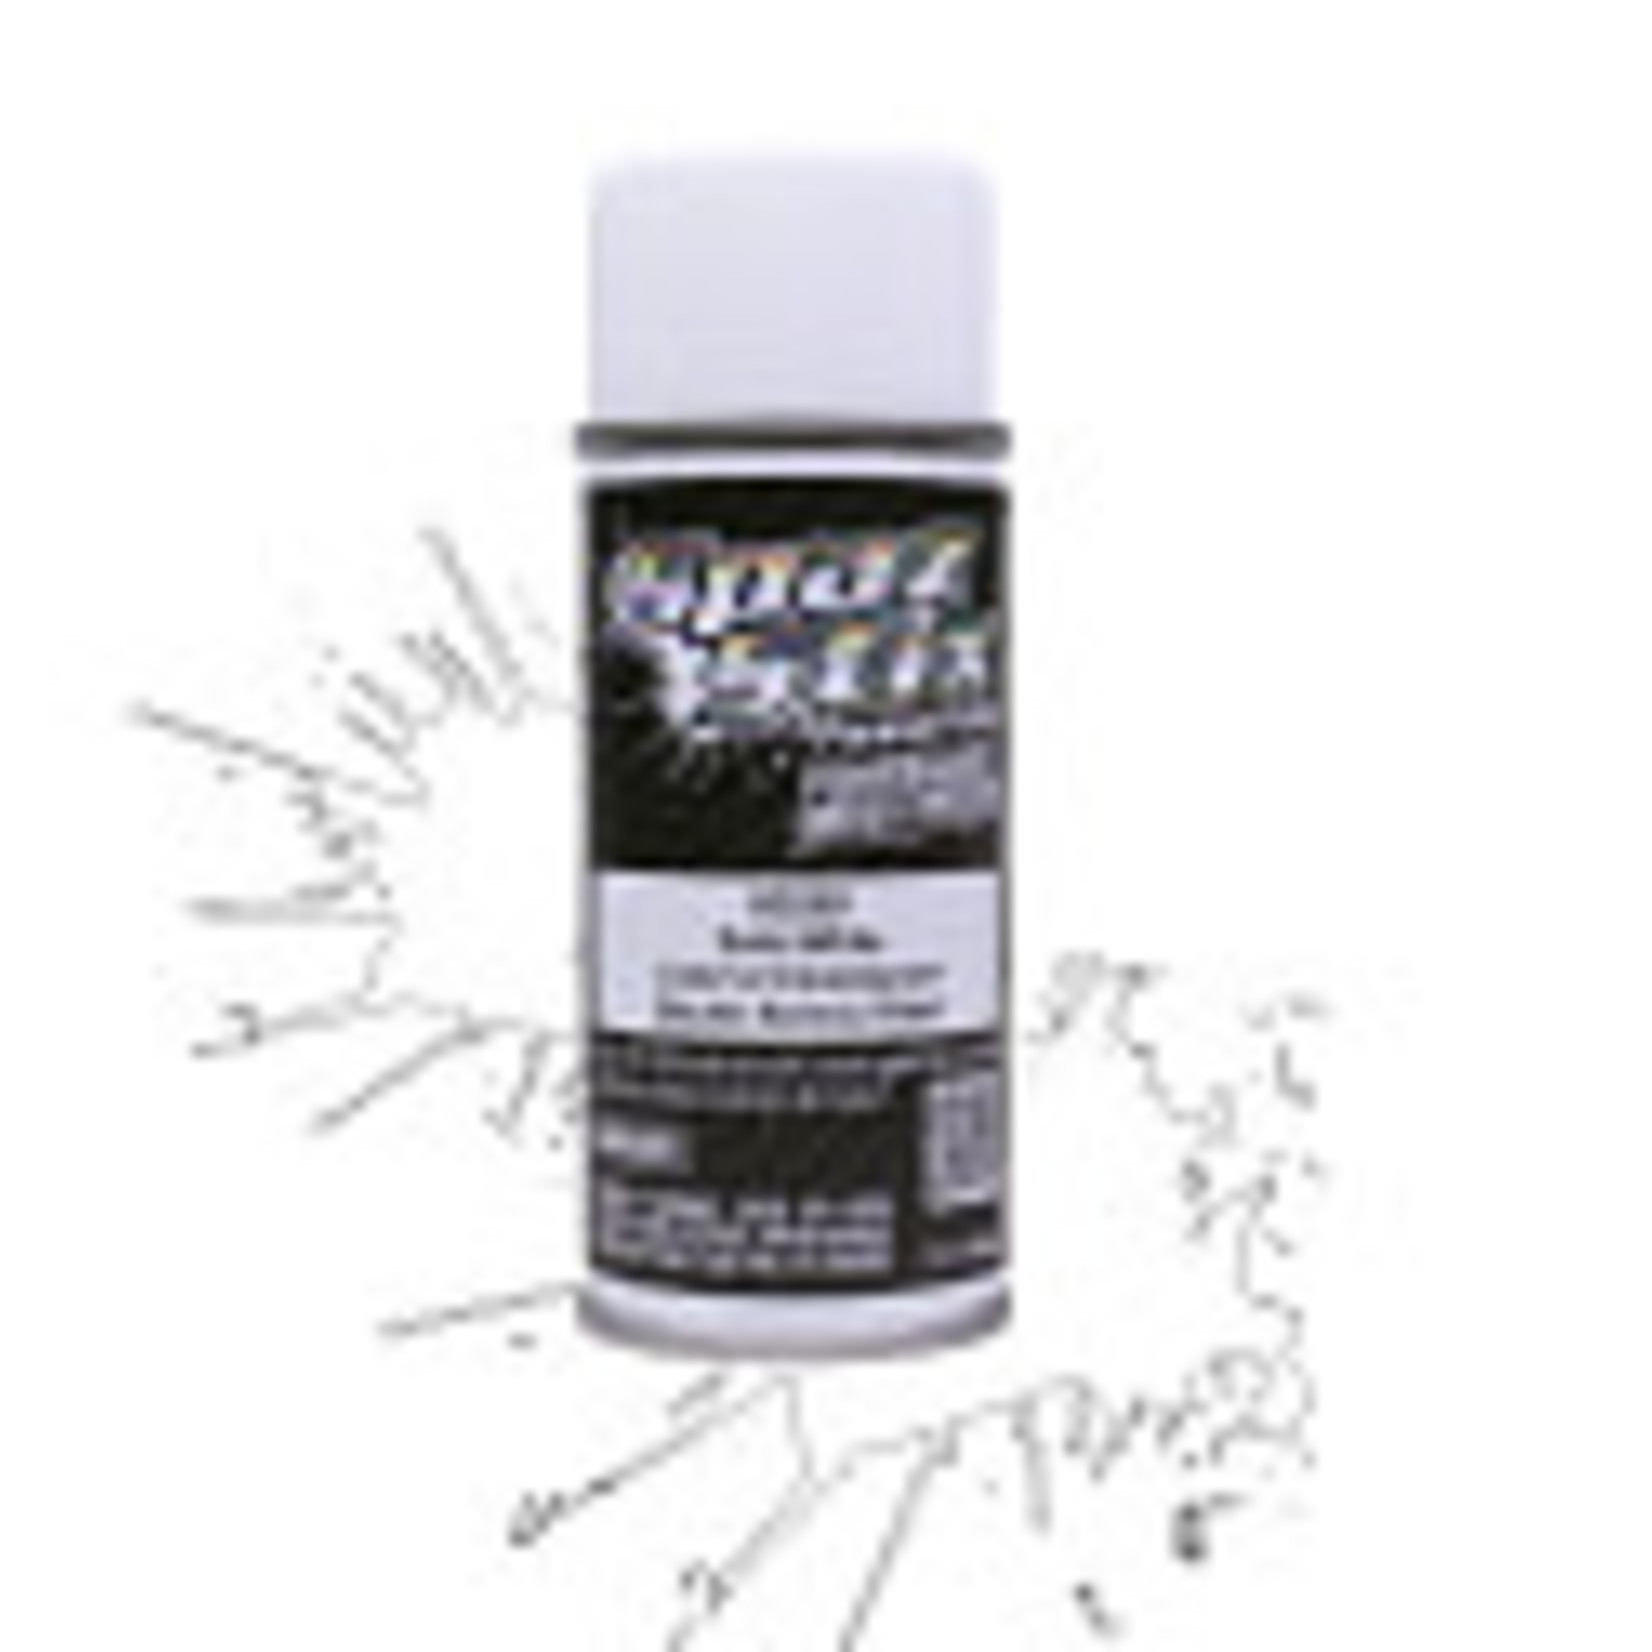 Spaz Stix SZX00209 Solid White/Backer, Aerosol Paint, 3.5oz Can